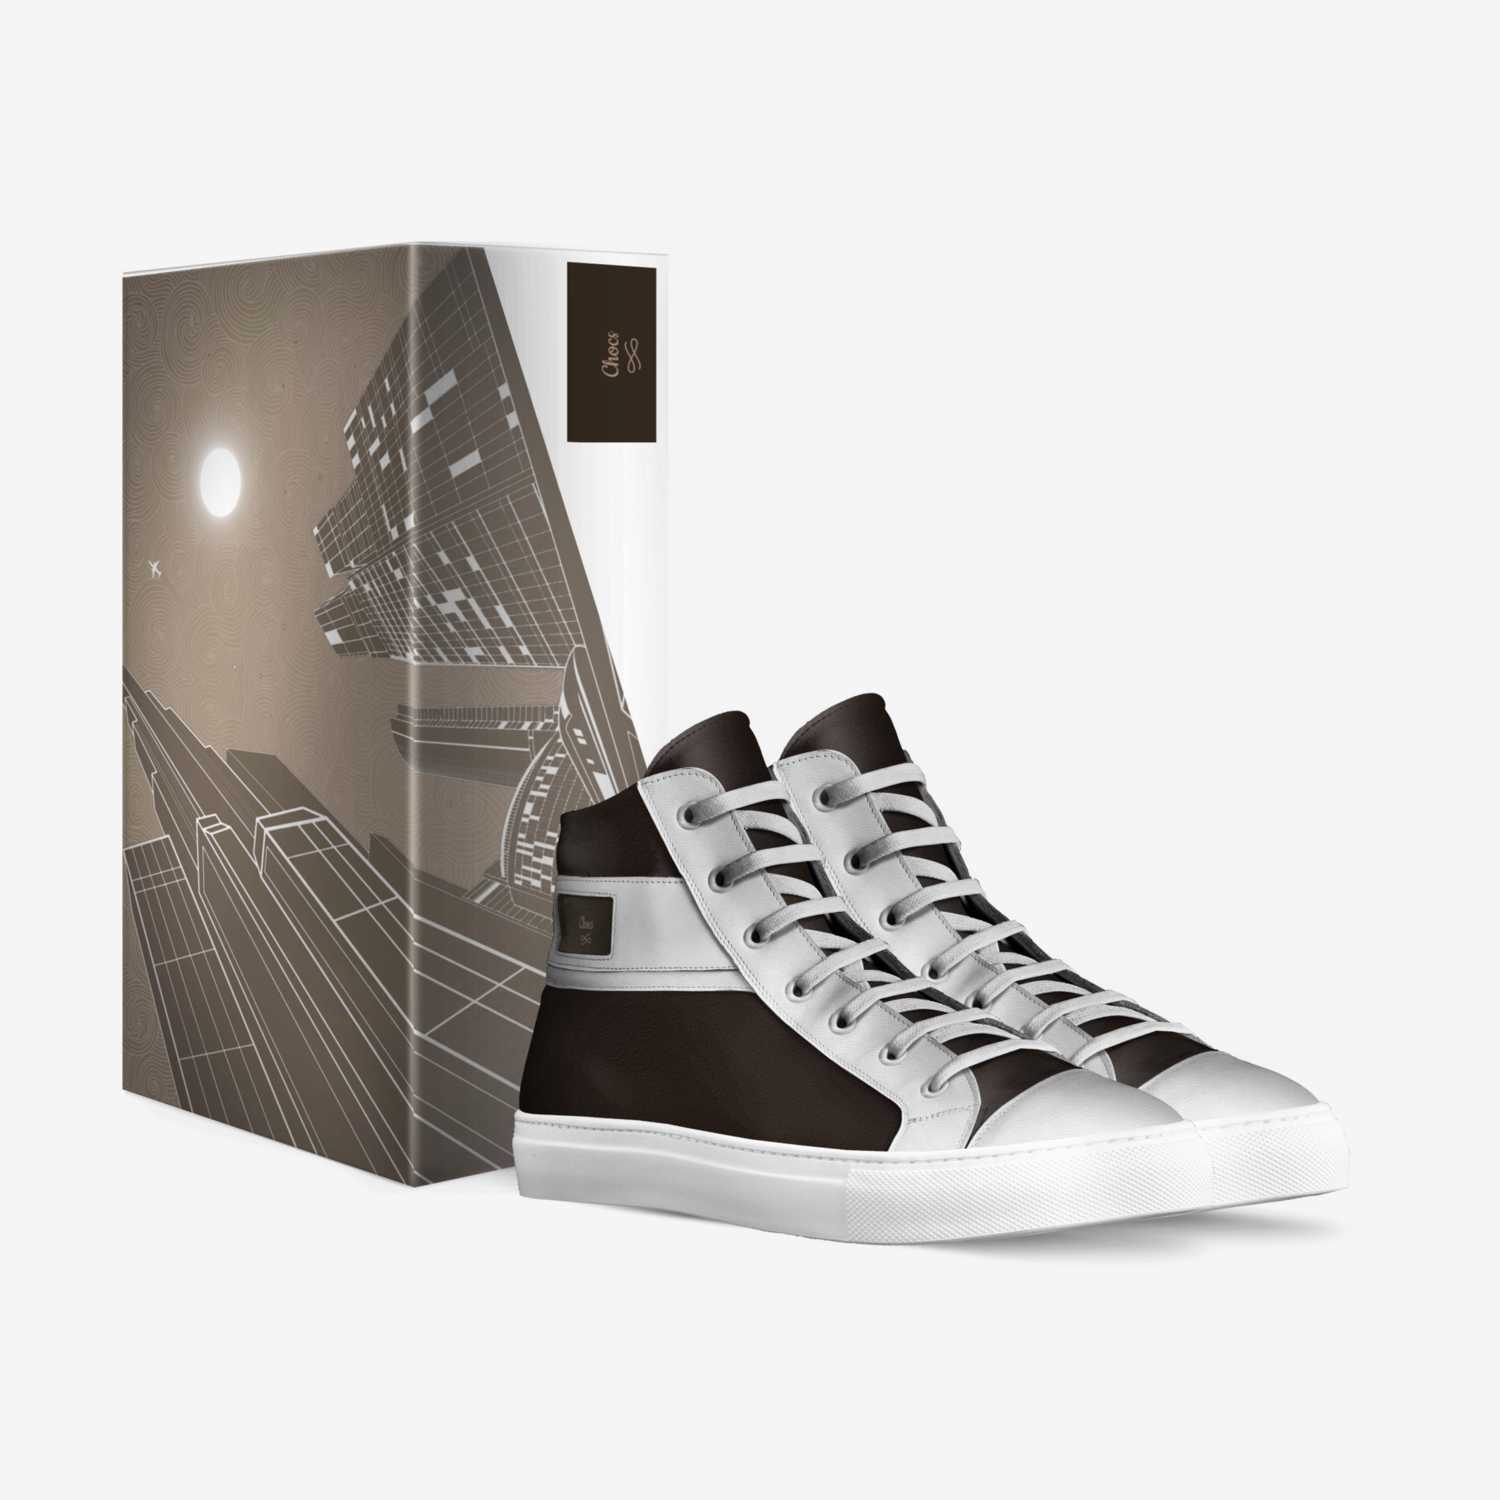 Chocs custom made in Italy shoes by Latonya | Box view